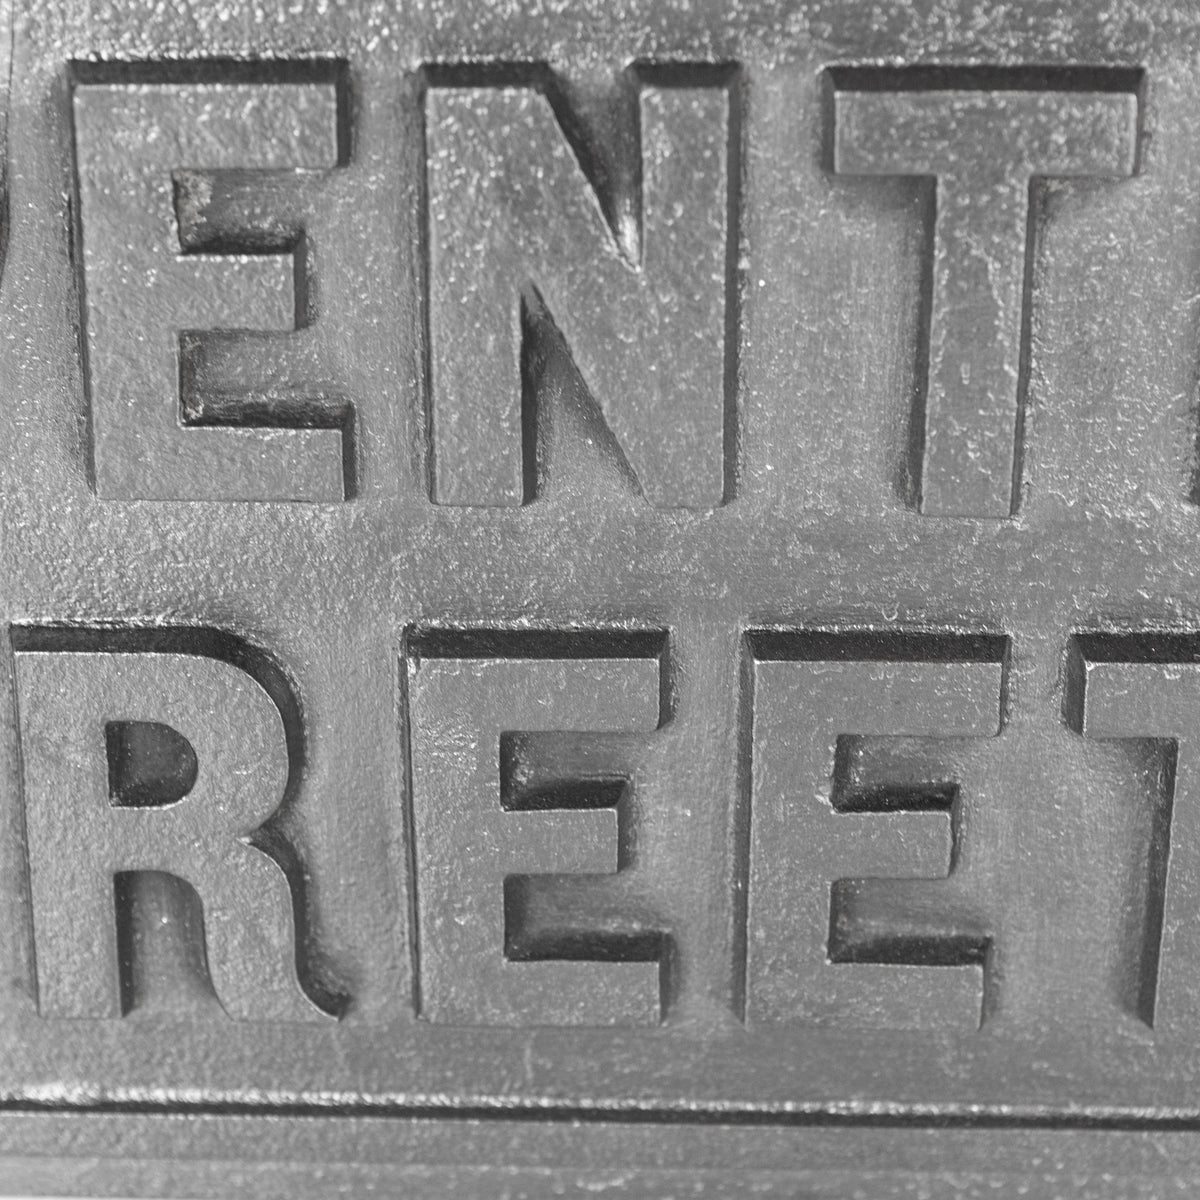 Antique Cast Iron London Street Sign: Pentlow Street | The Architectural Forum